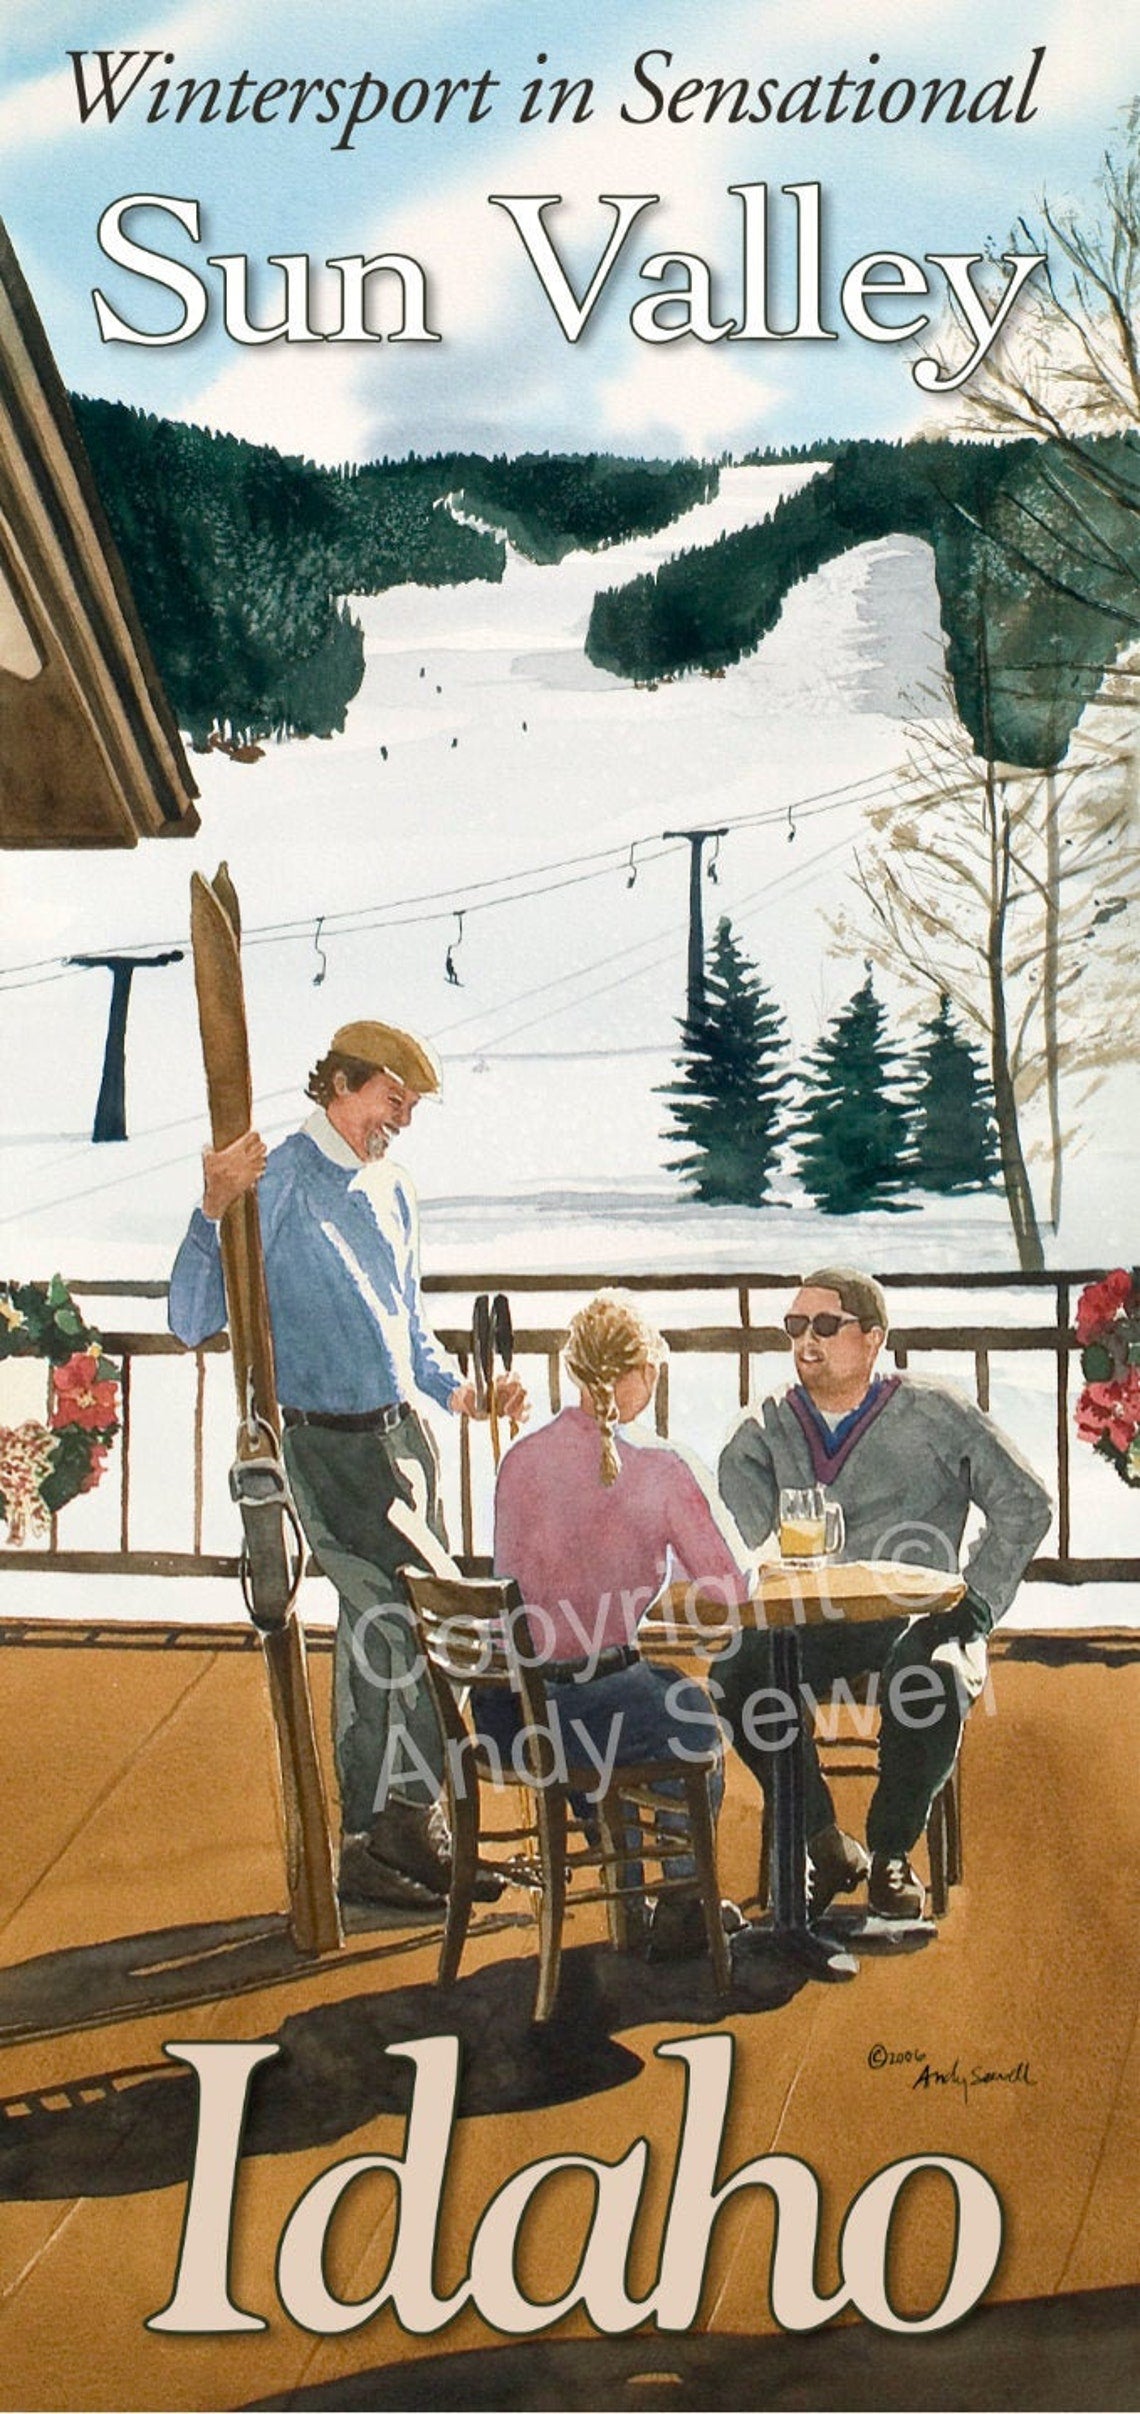 Vintage Look Ski Poster/Print "Wintersport Sun Valley" from Original watercolor